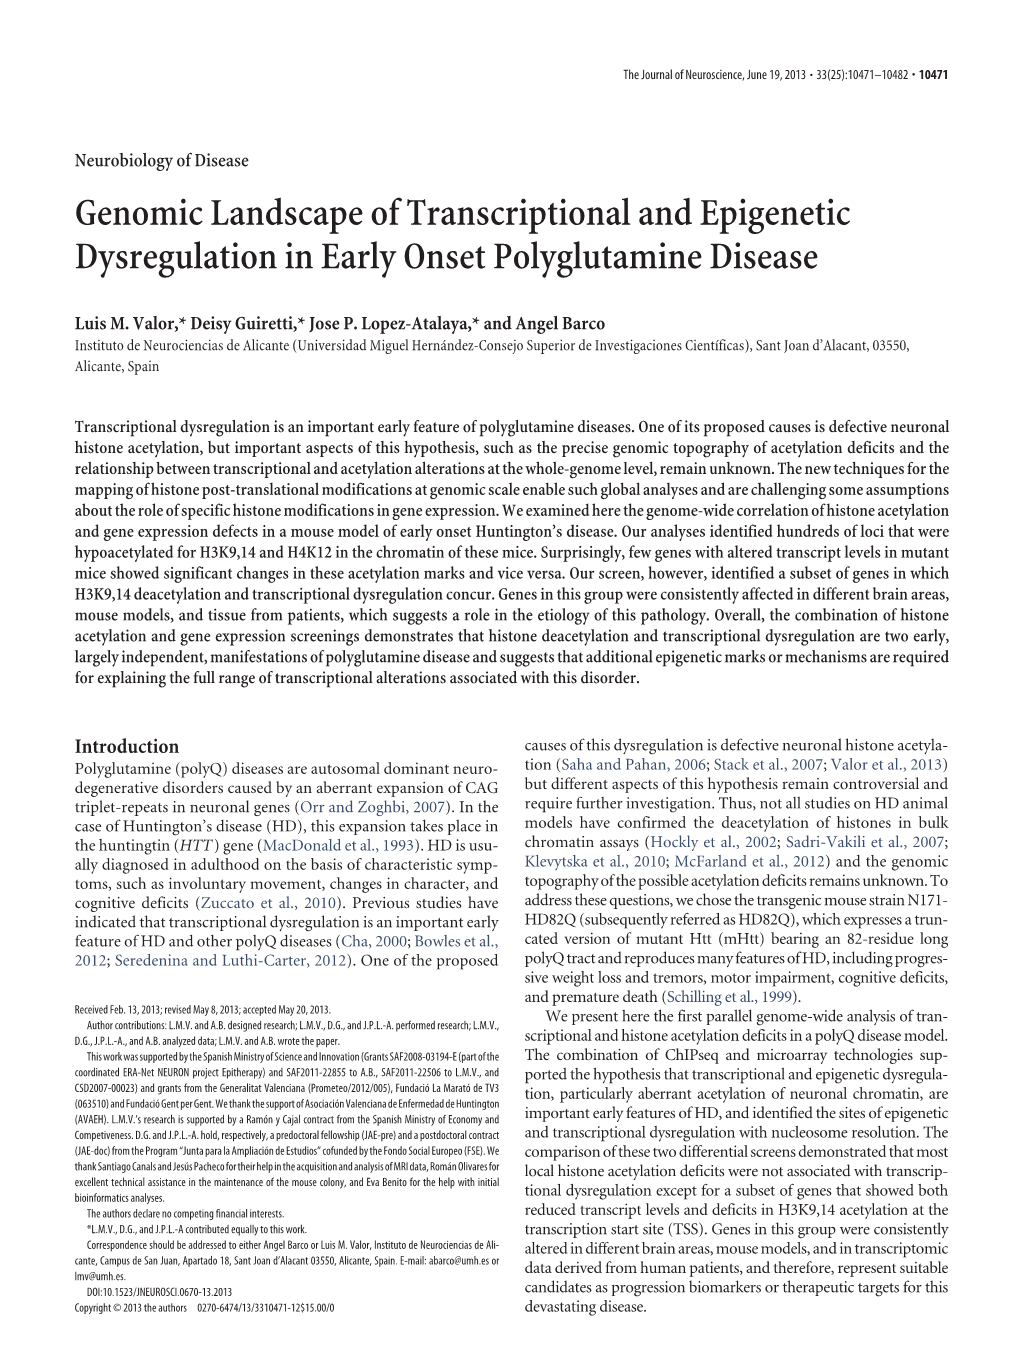 Genomic Landscape of Transcriptional and Epigenetic Dysregulation in Early Onset Polyglutamine Disease